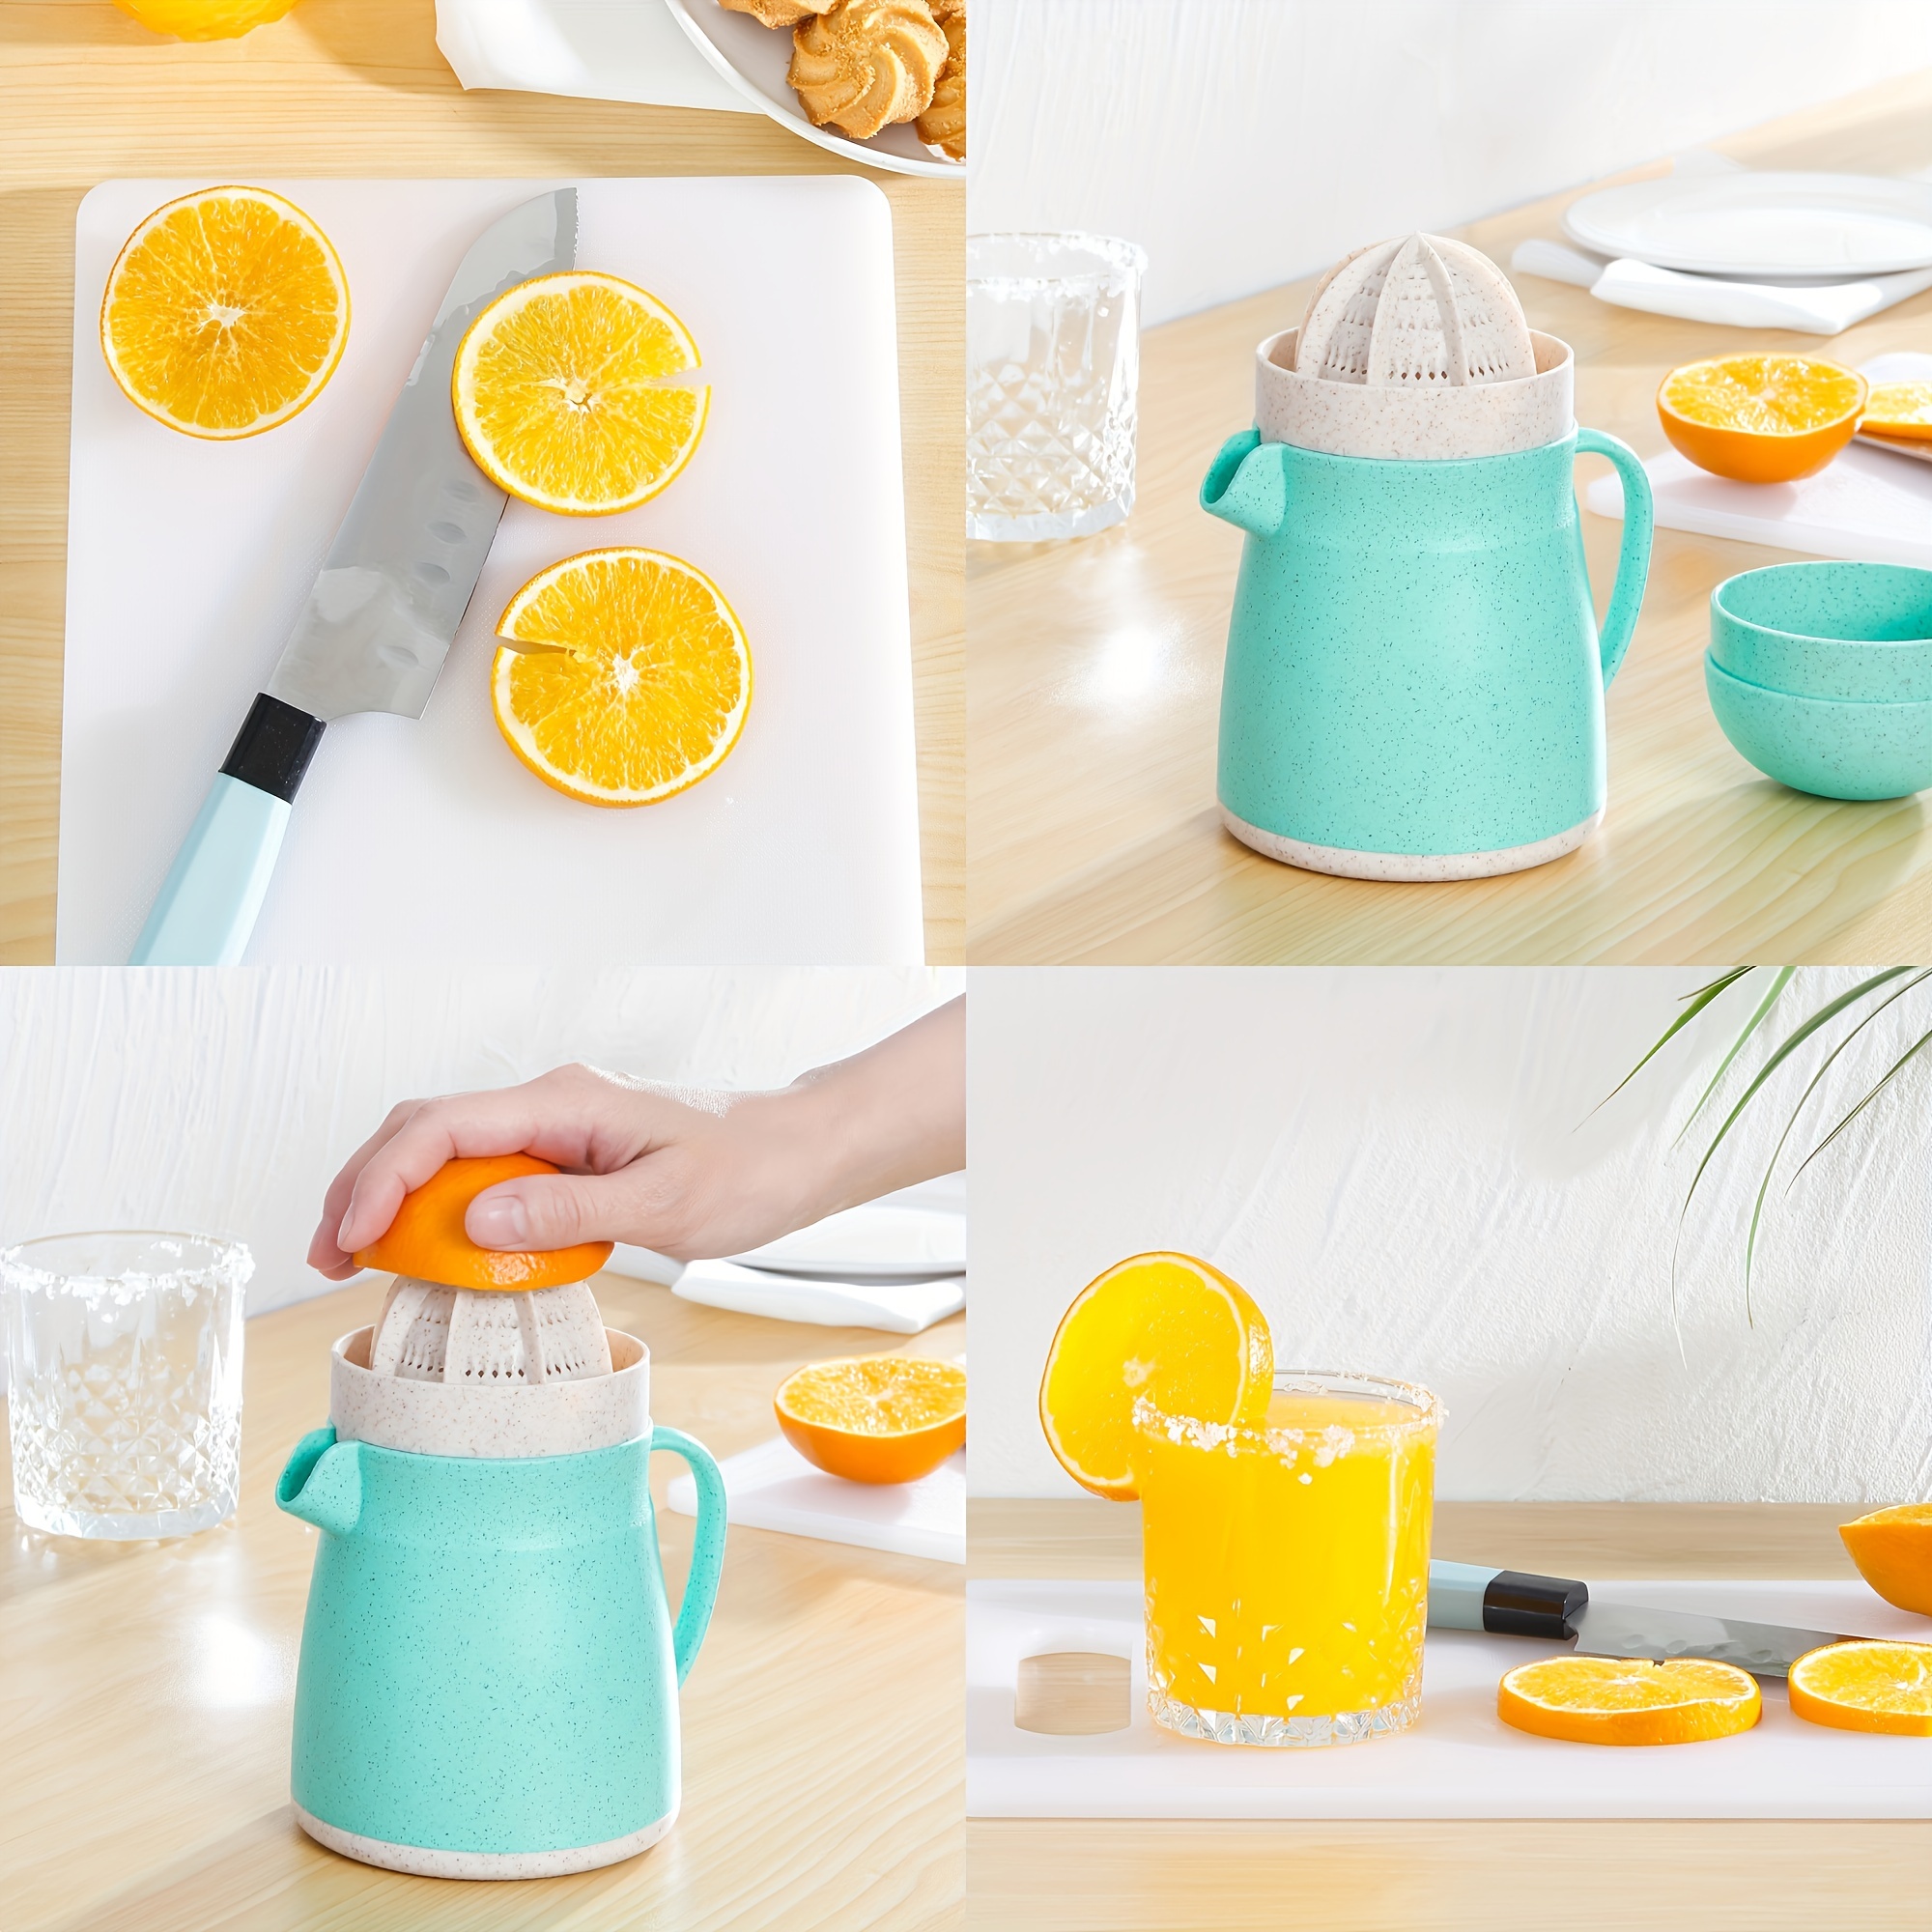 Manual Fruit Juicer, Lemon Squeezer Hand Juicer, Portable Fruit